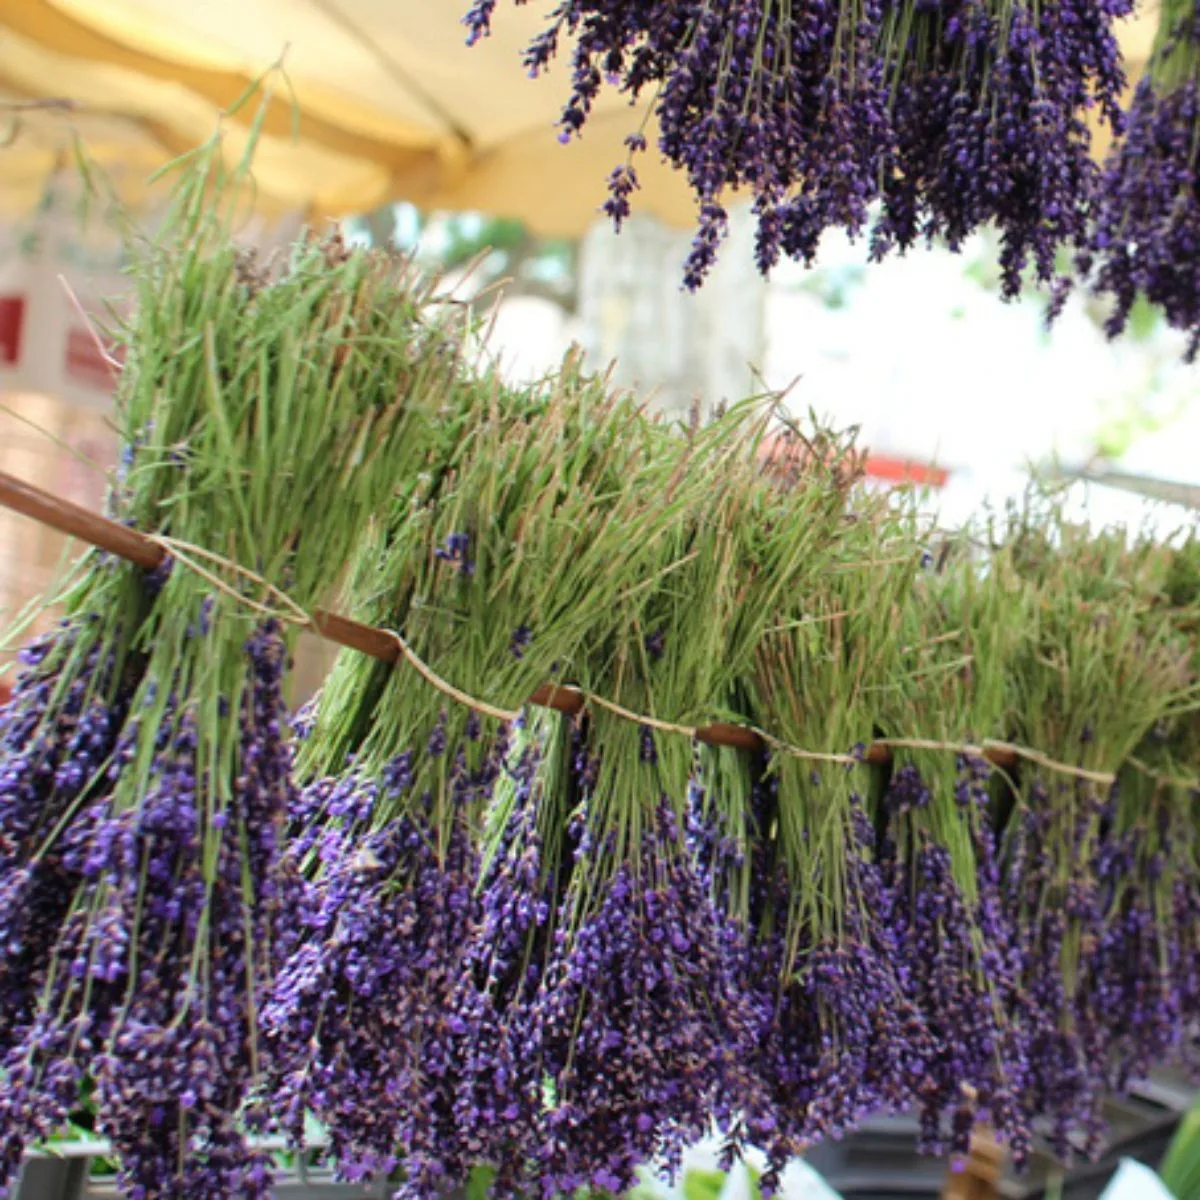 Hanging lavender bundles.